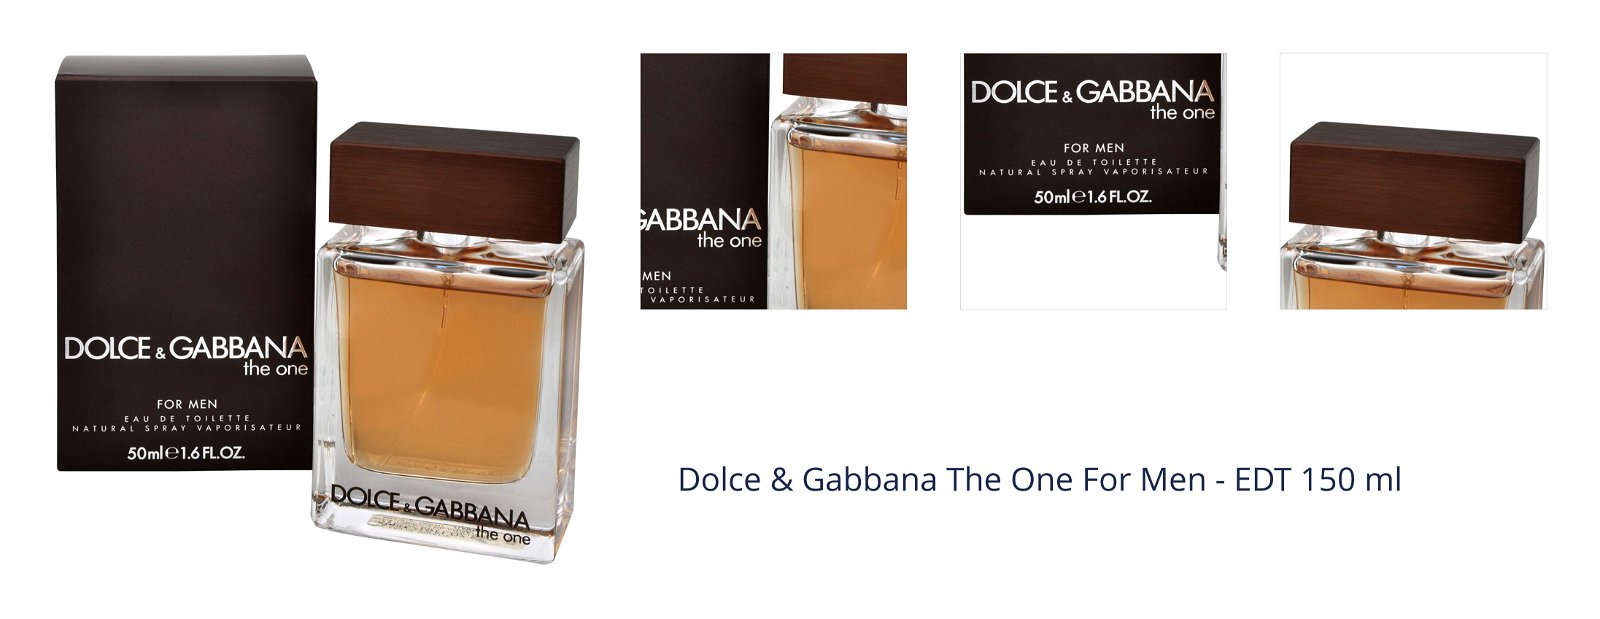 Dolce & Gabbana The One For Men - EDT 150 ml 7